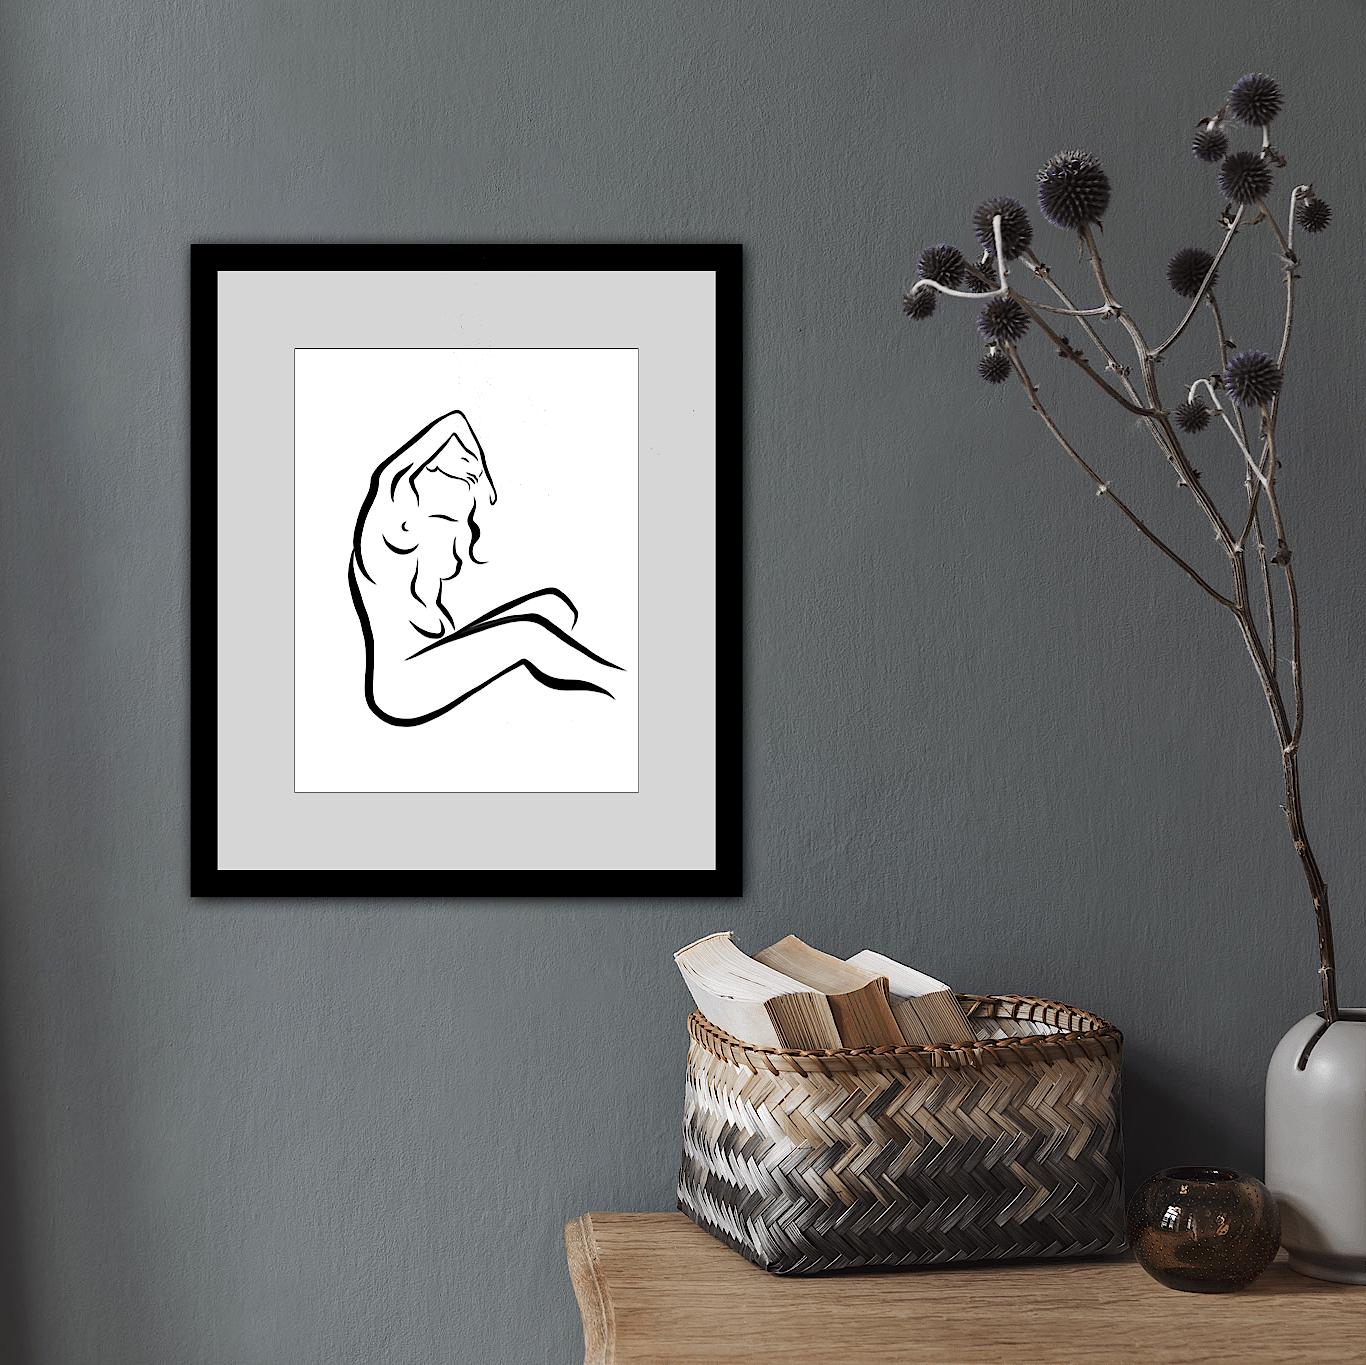 Haiku #18 - Digital Vector Drawing Seated Female Nude Woman Figure Arm Raised - Contemporary Print by Michael Binkley